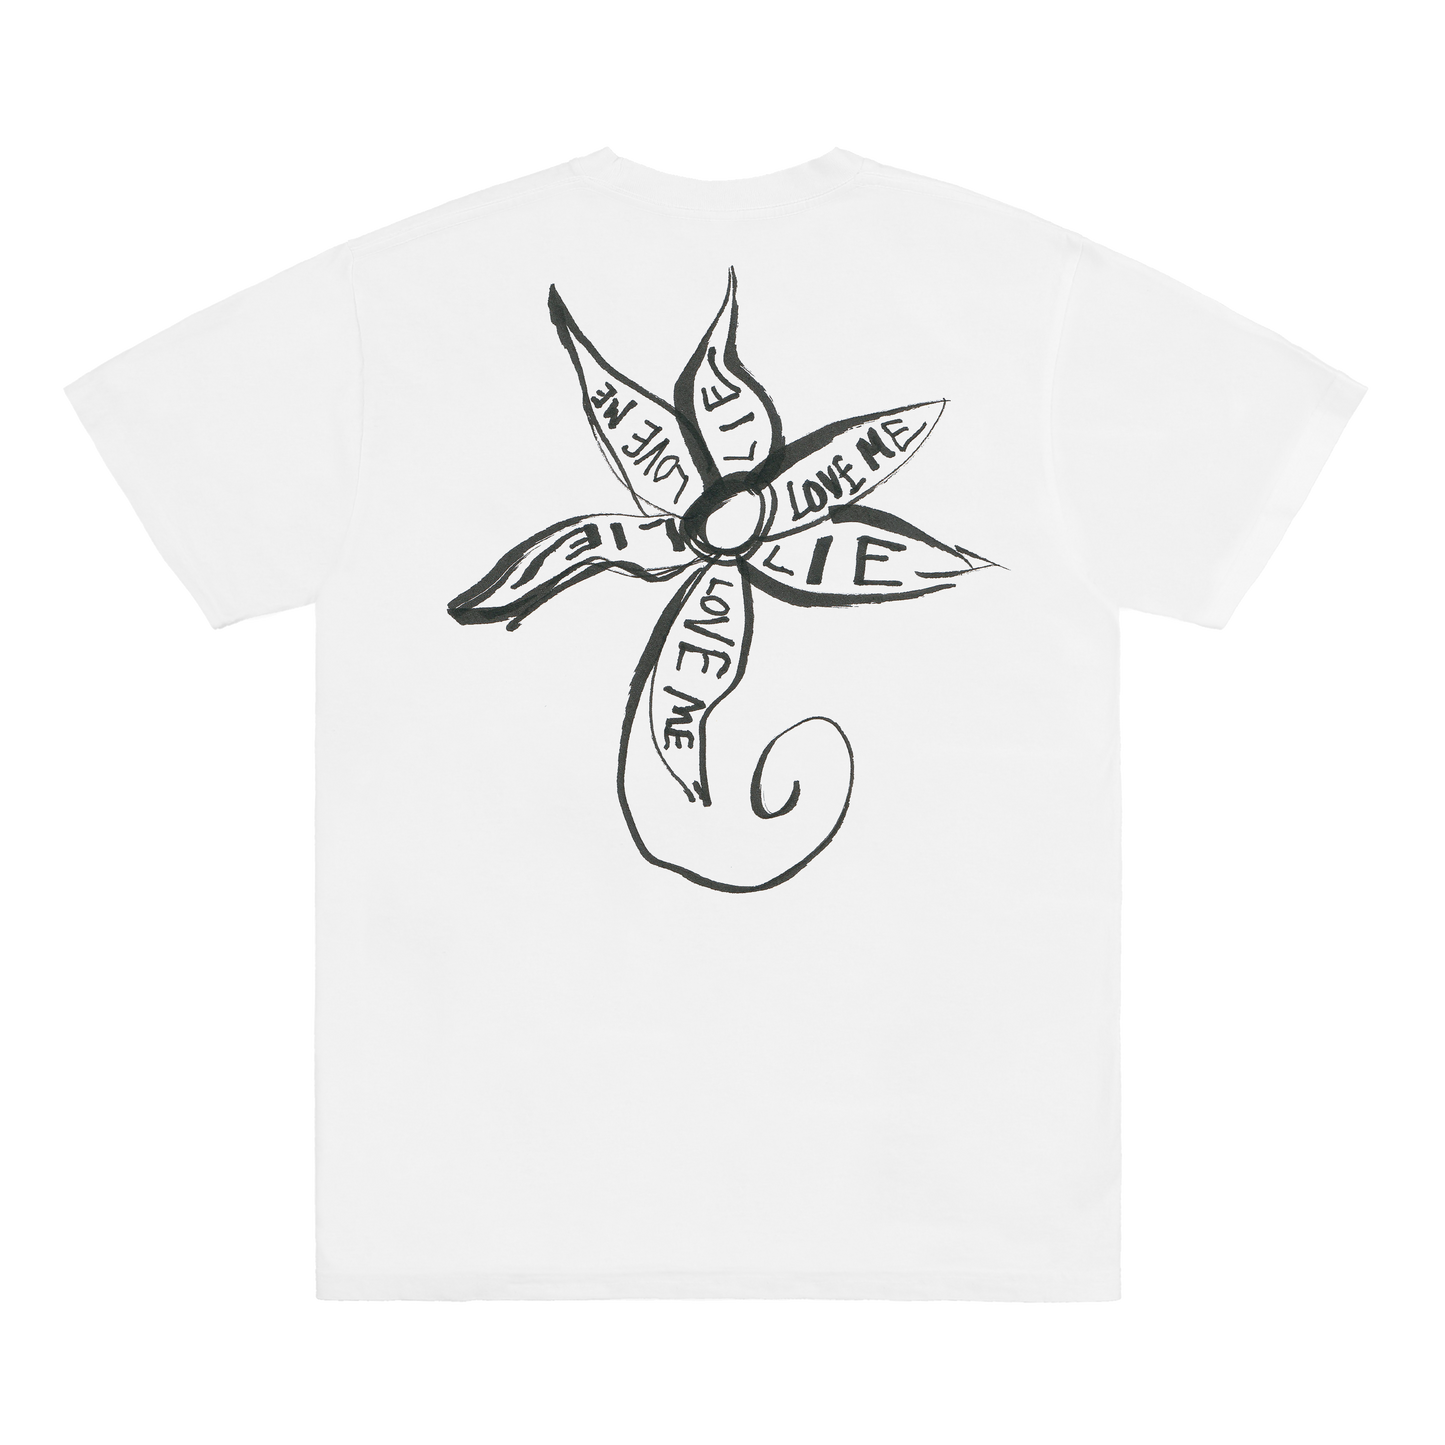 LLYLM Flower T-shirt